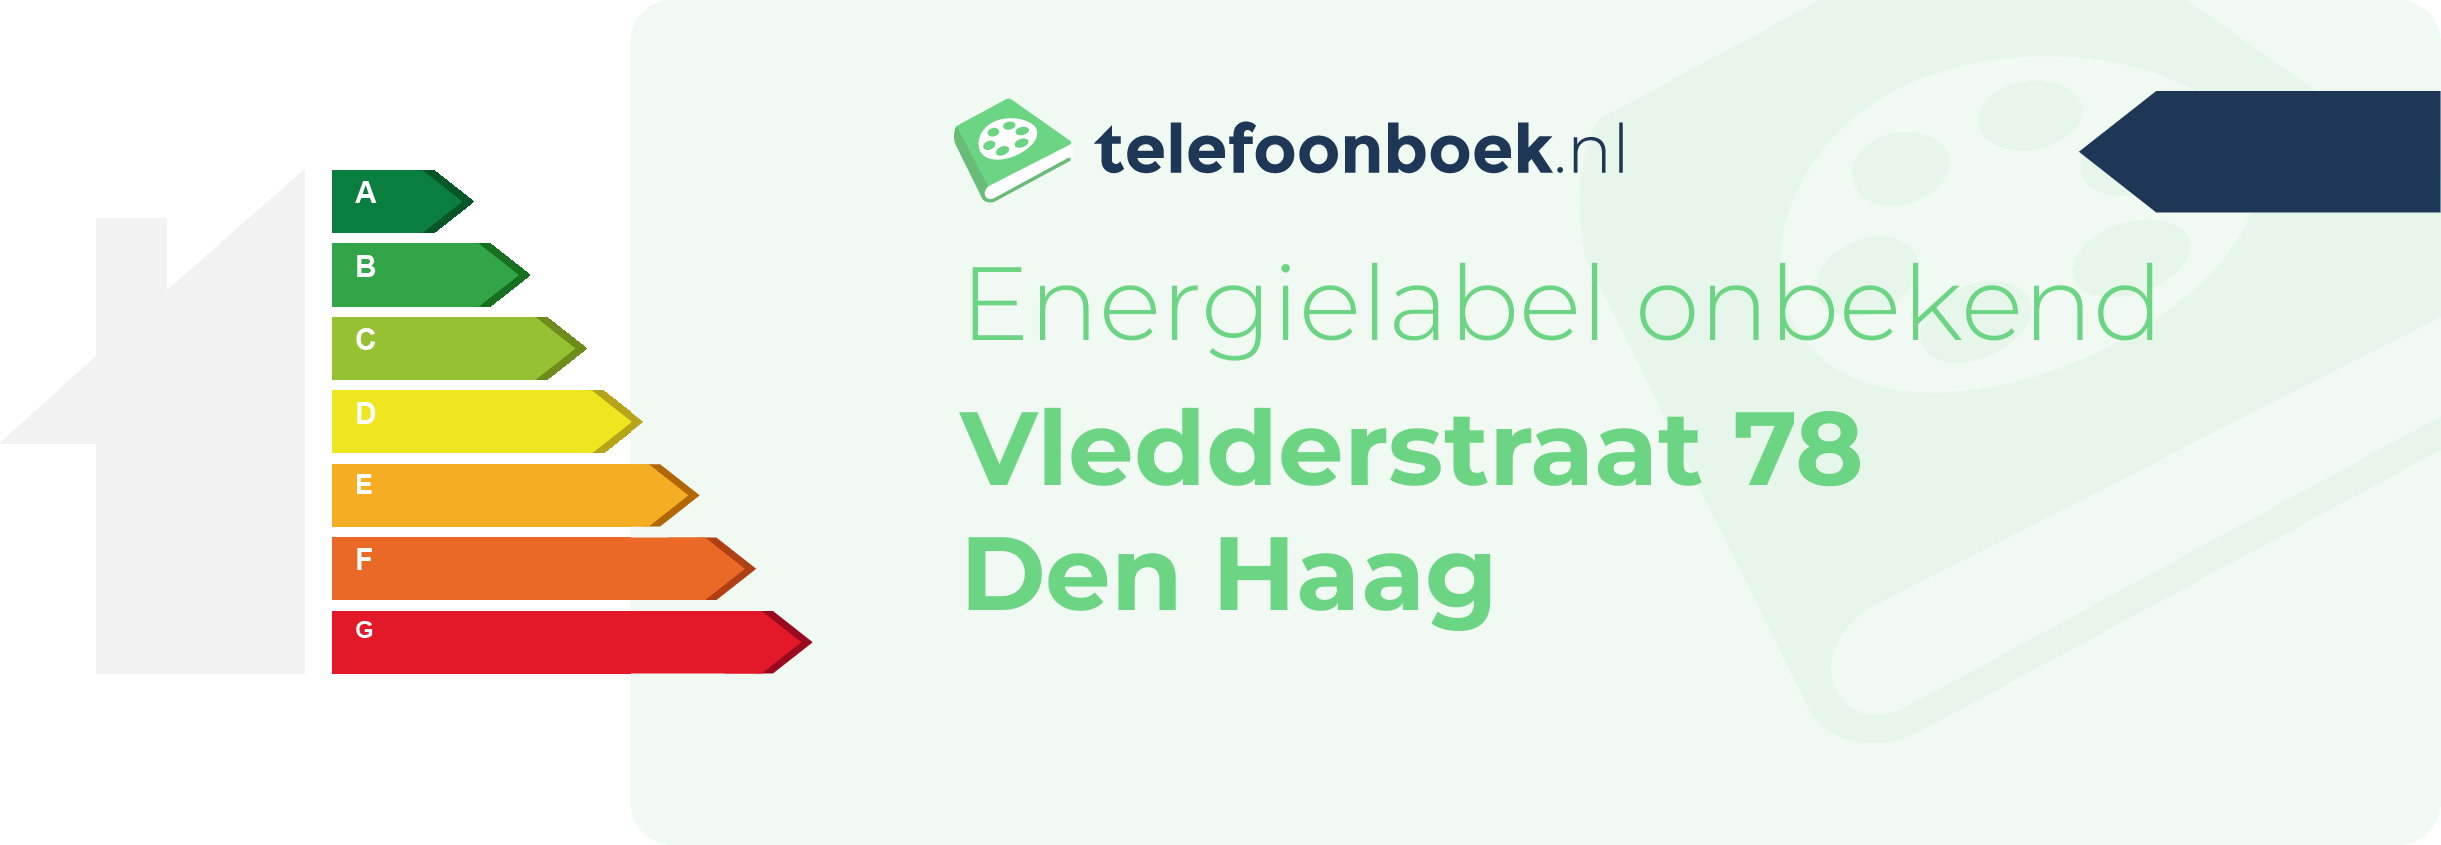 Energielabel Vledderstraat 78 Den Haag